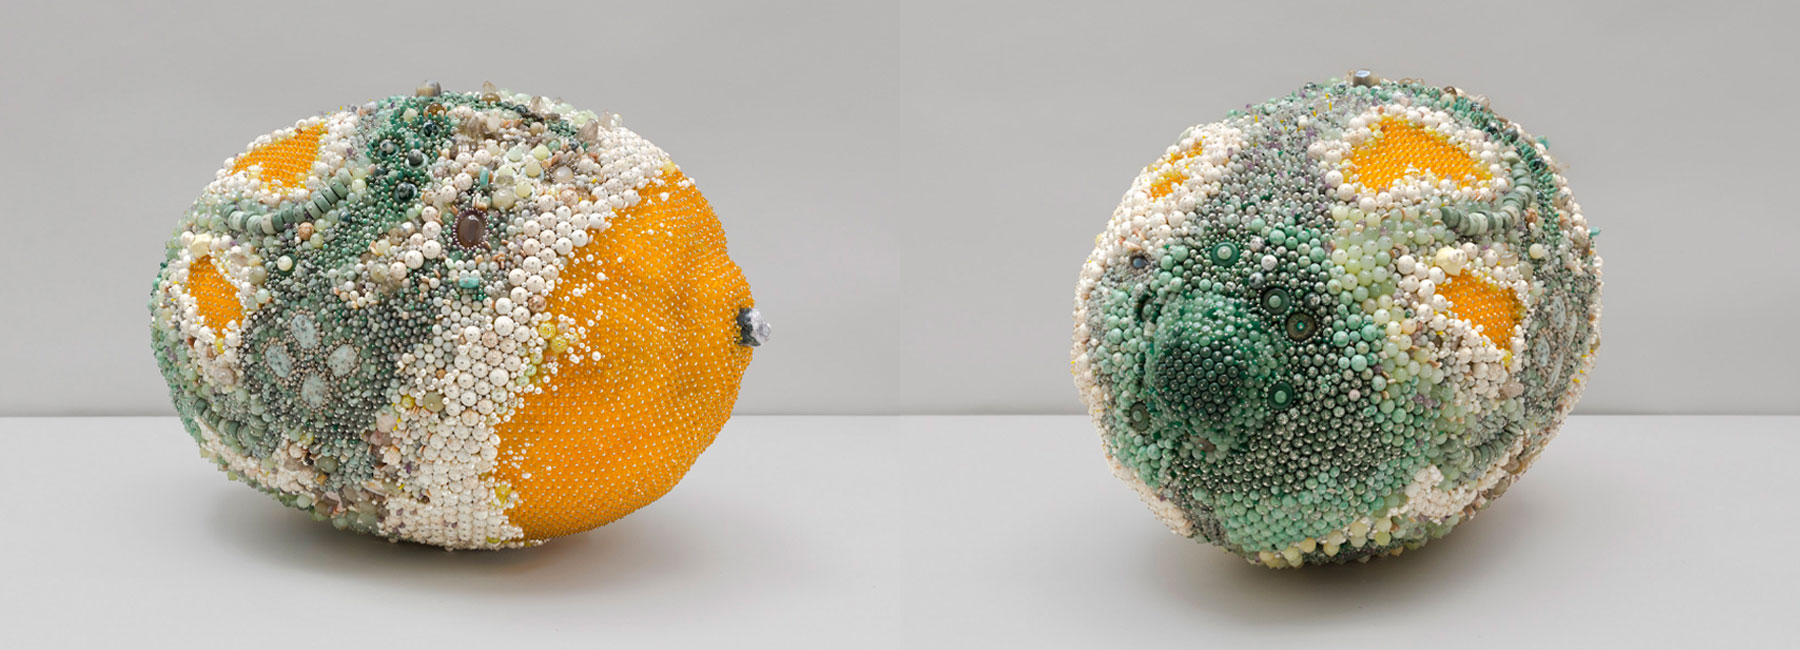 kathleen ryan creates moldy fruit sculptures from semi-precious gemstones